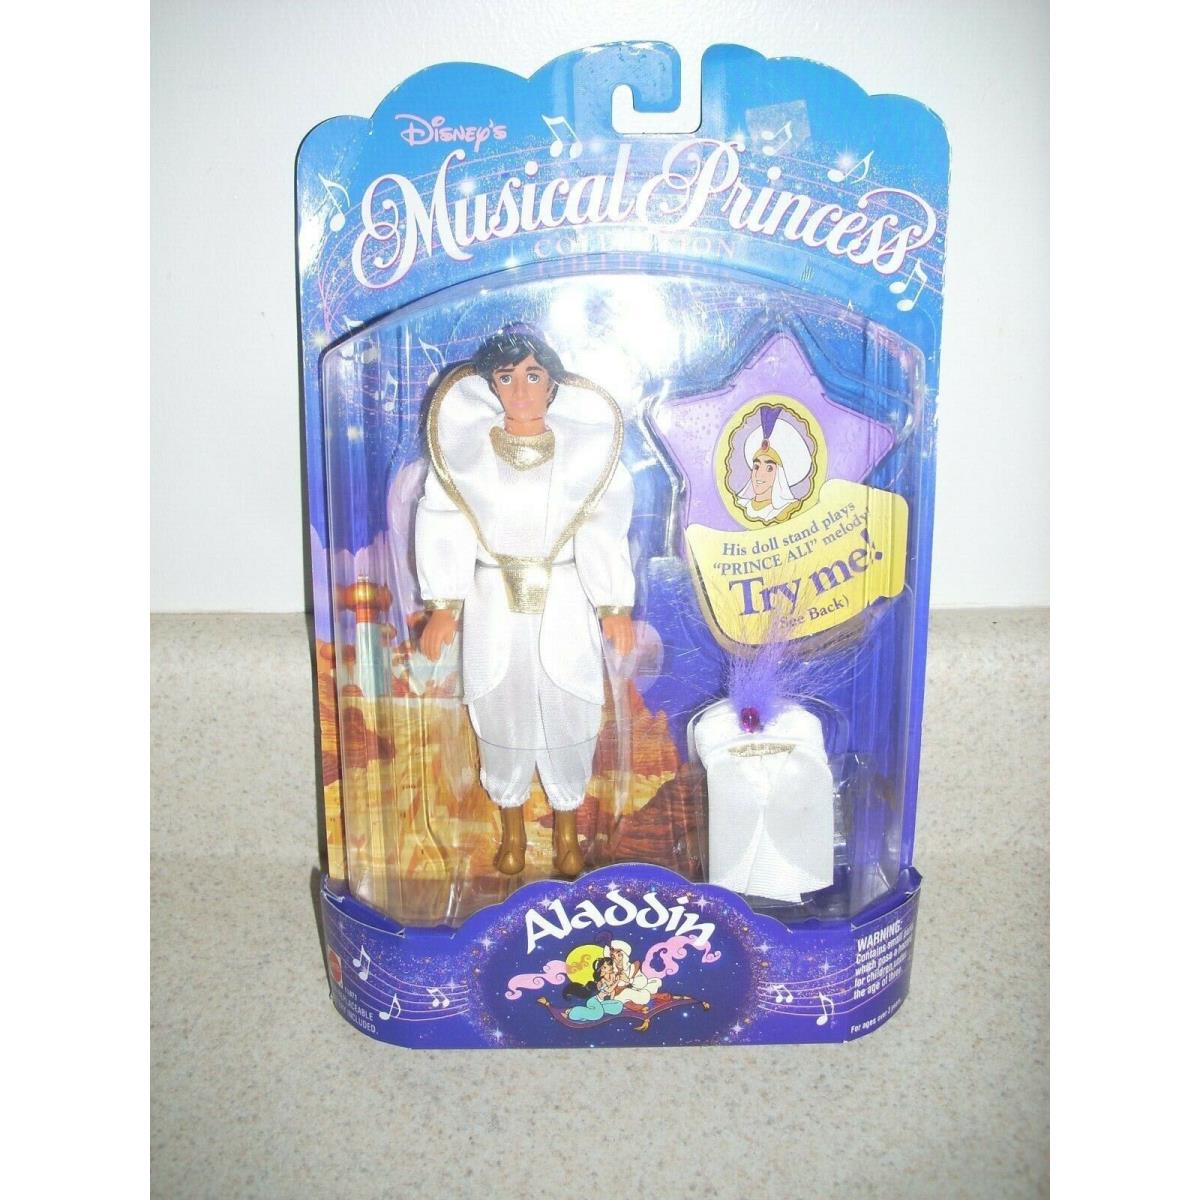 1994 Vintage Mattel Disney Musical Princess Aladdin in Package 4054